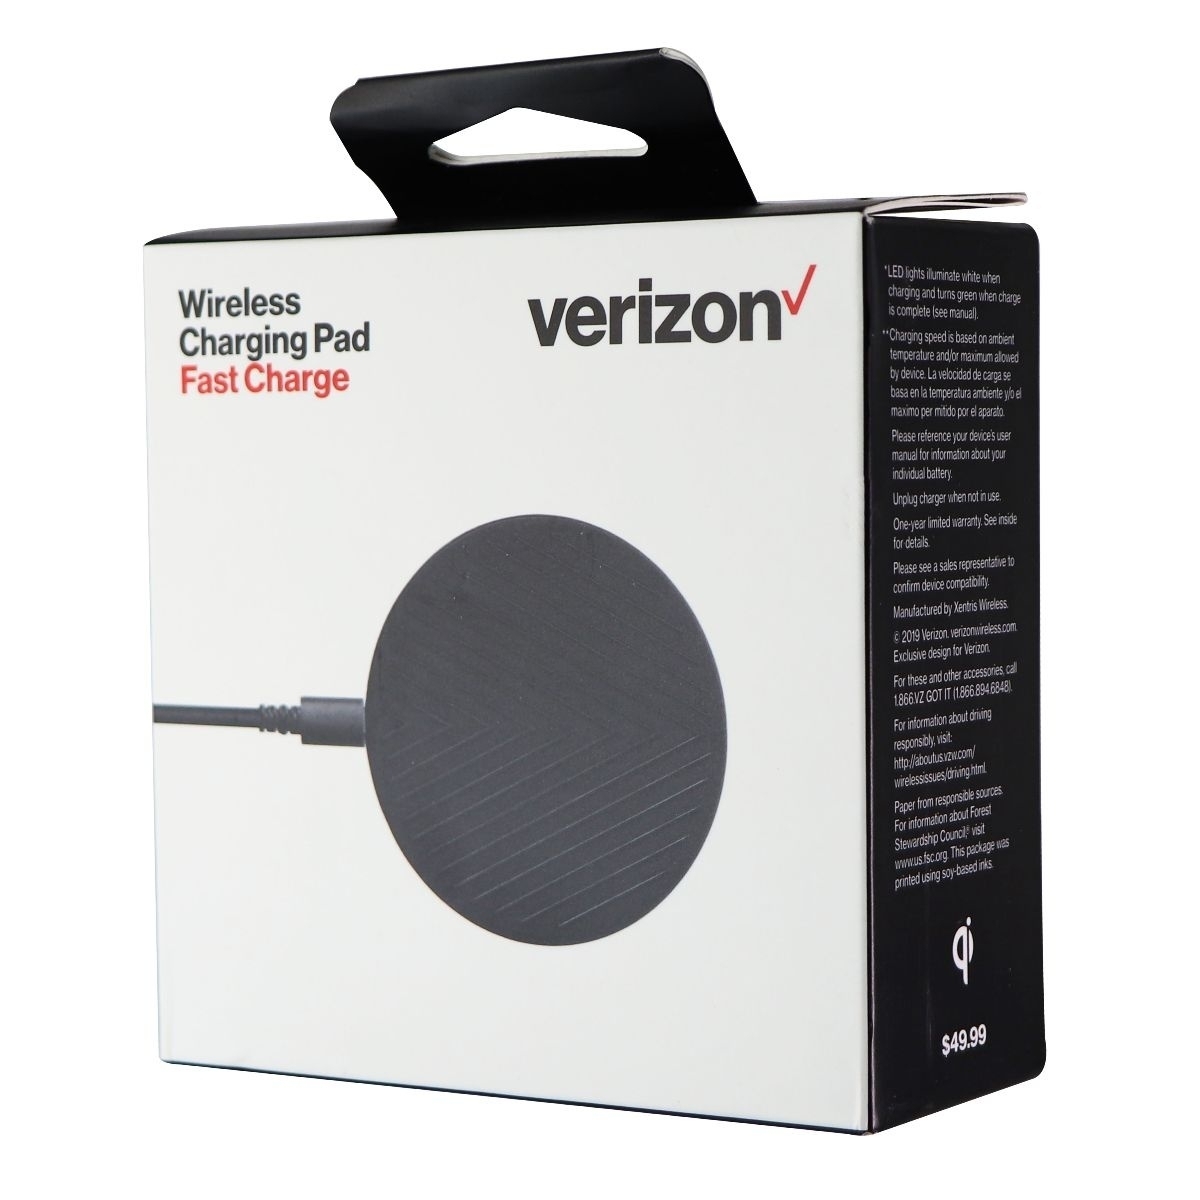 Verizon 10W Qi Wireless Charging Pad For IPhone And Samsung - Black (Refurbished)